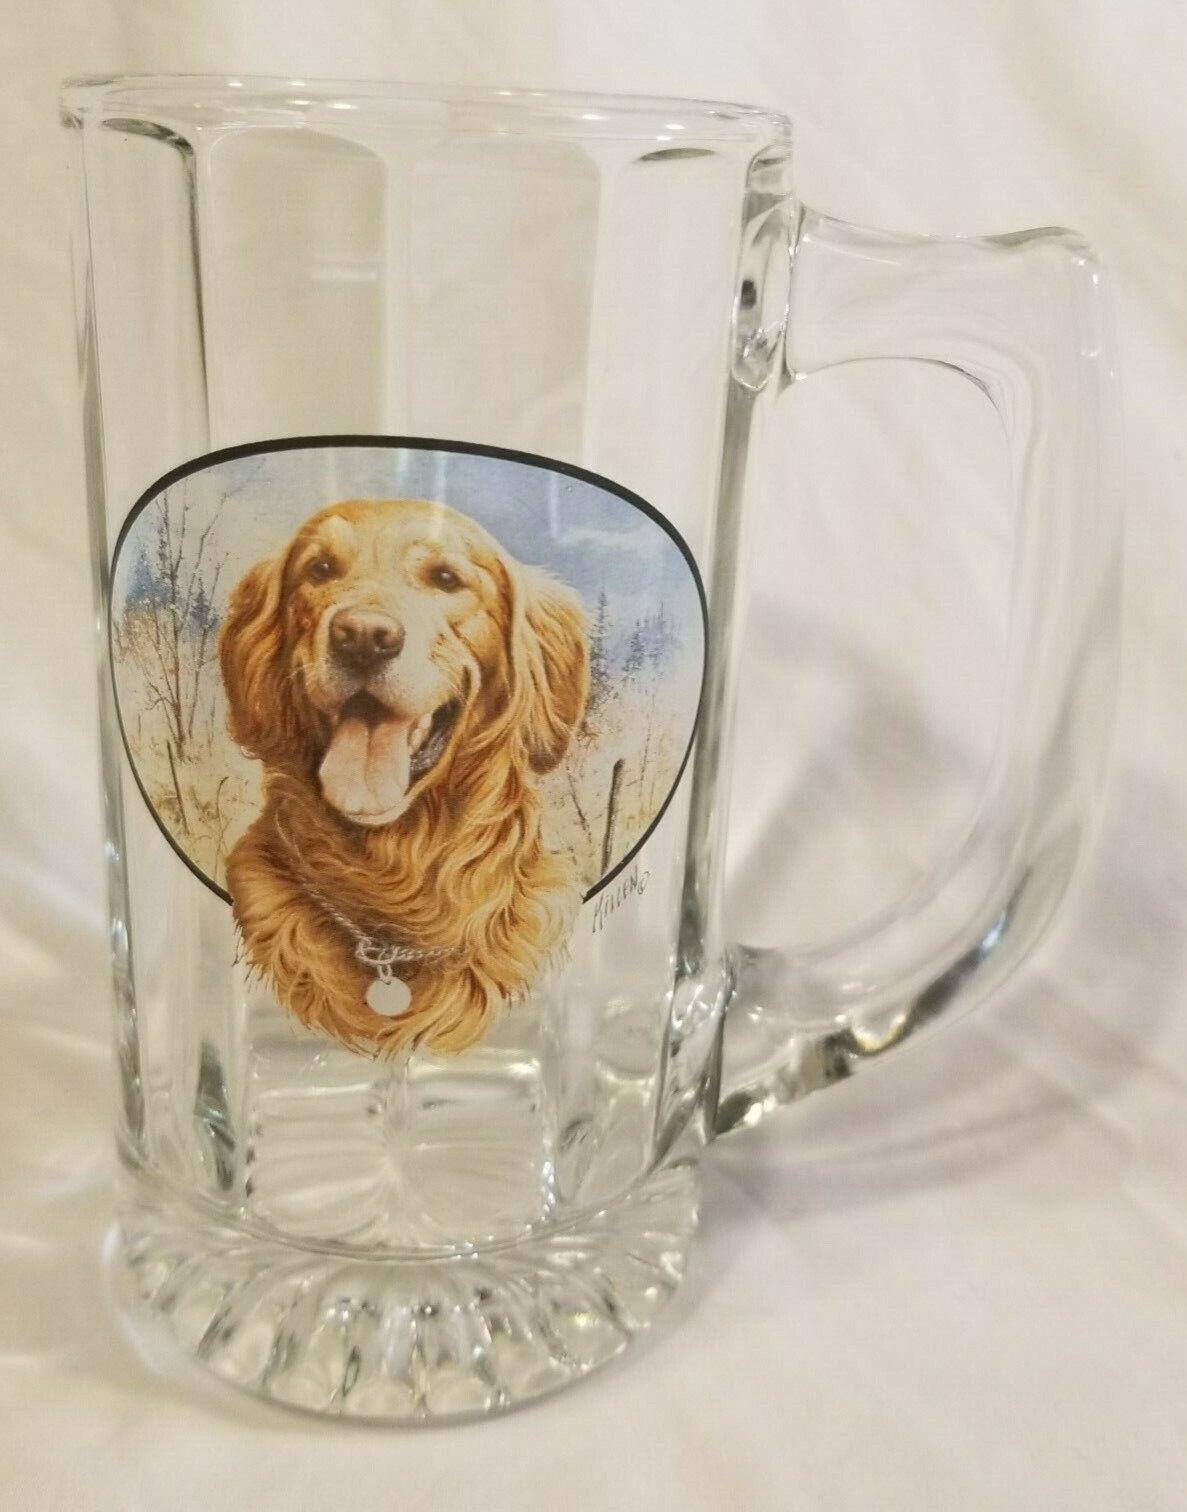 Primary image for Jim Killen That's My Dog, Too! Golden Retriever Portrait Glass Mug